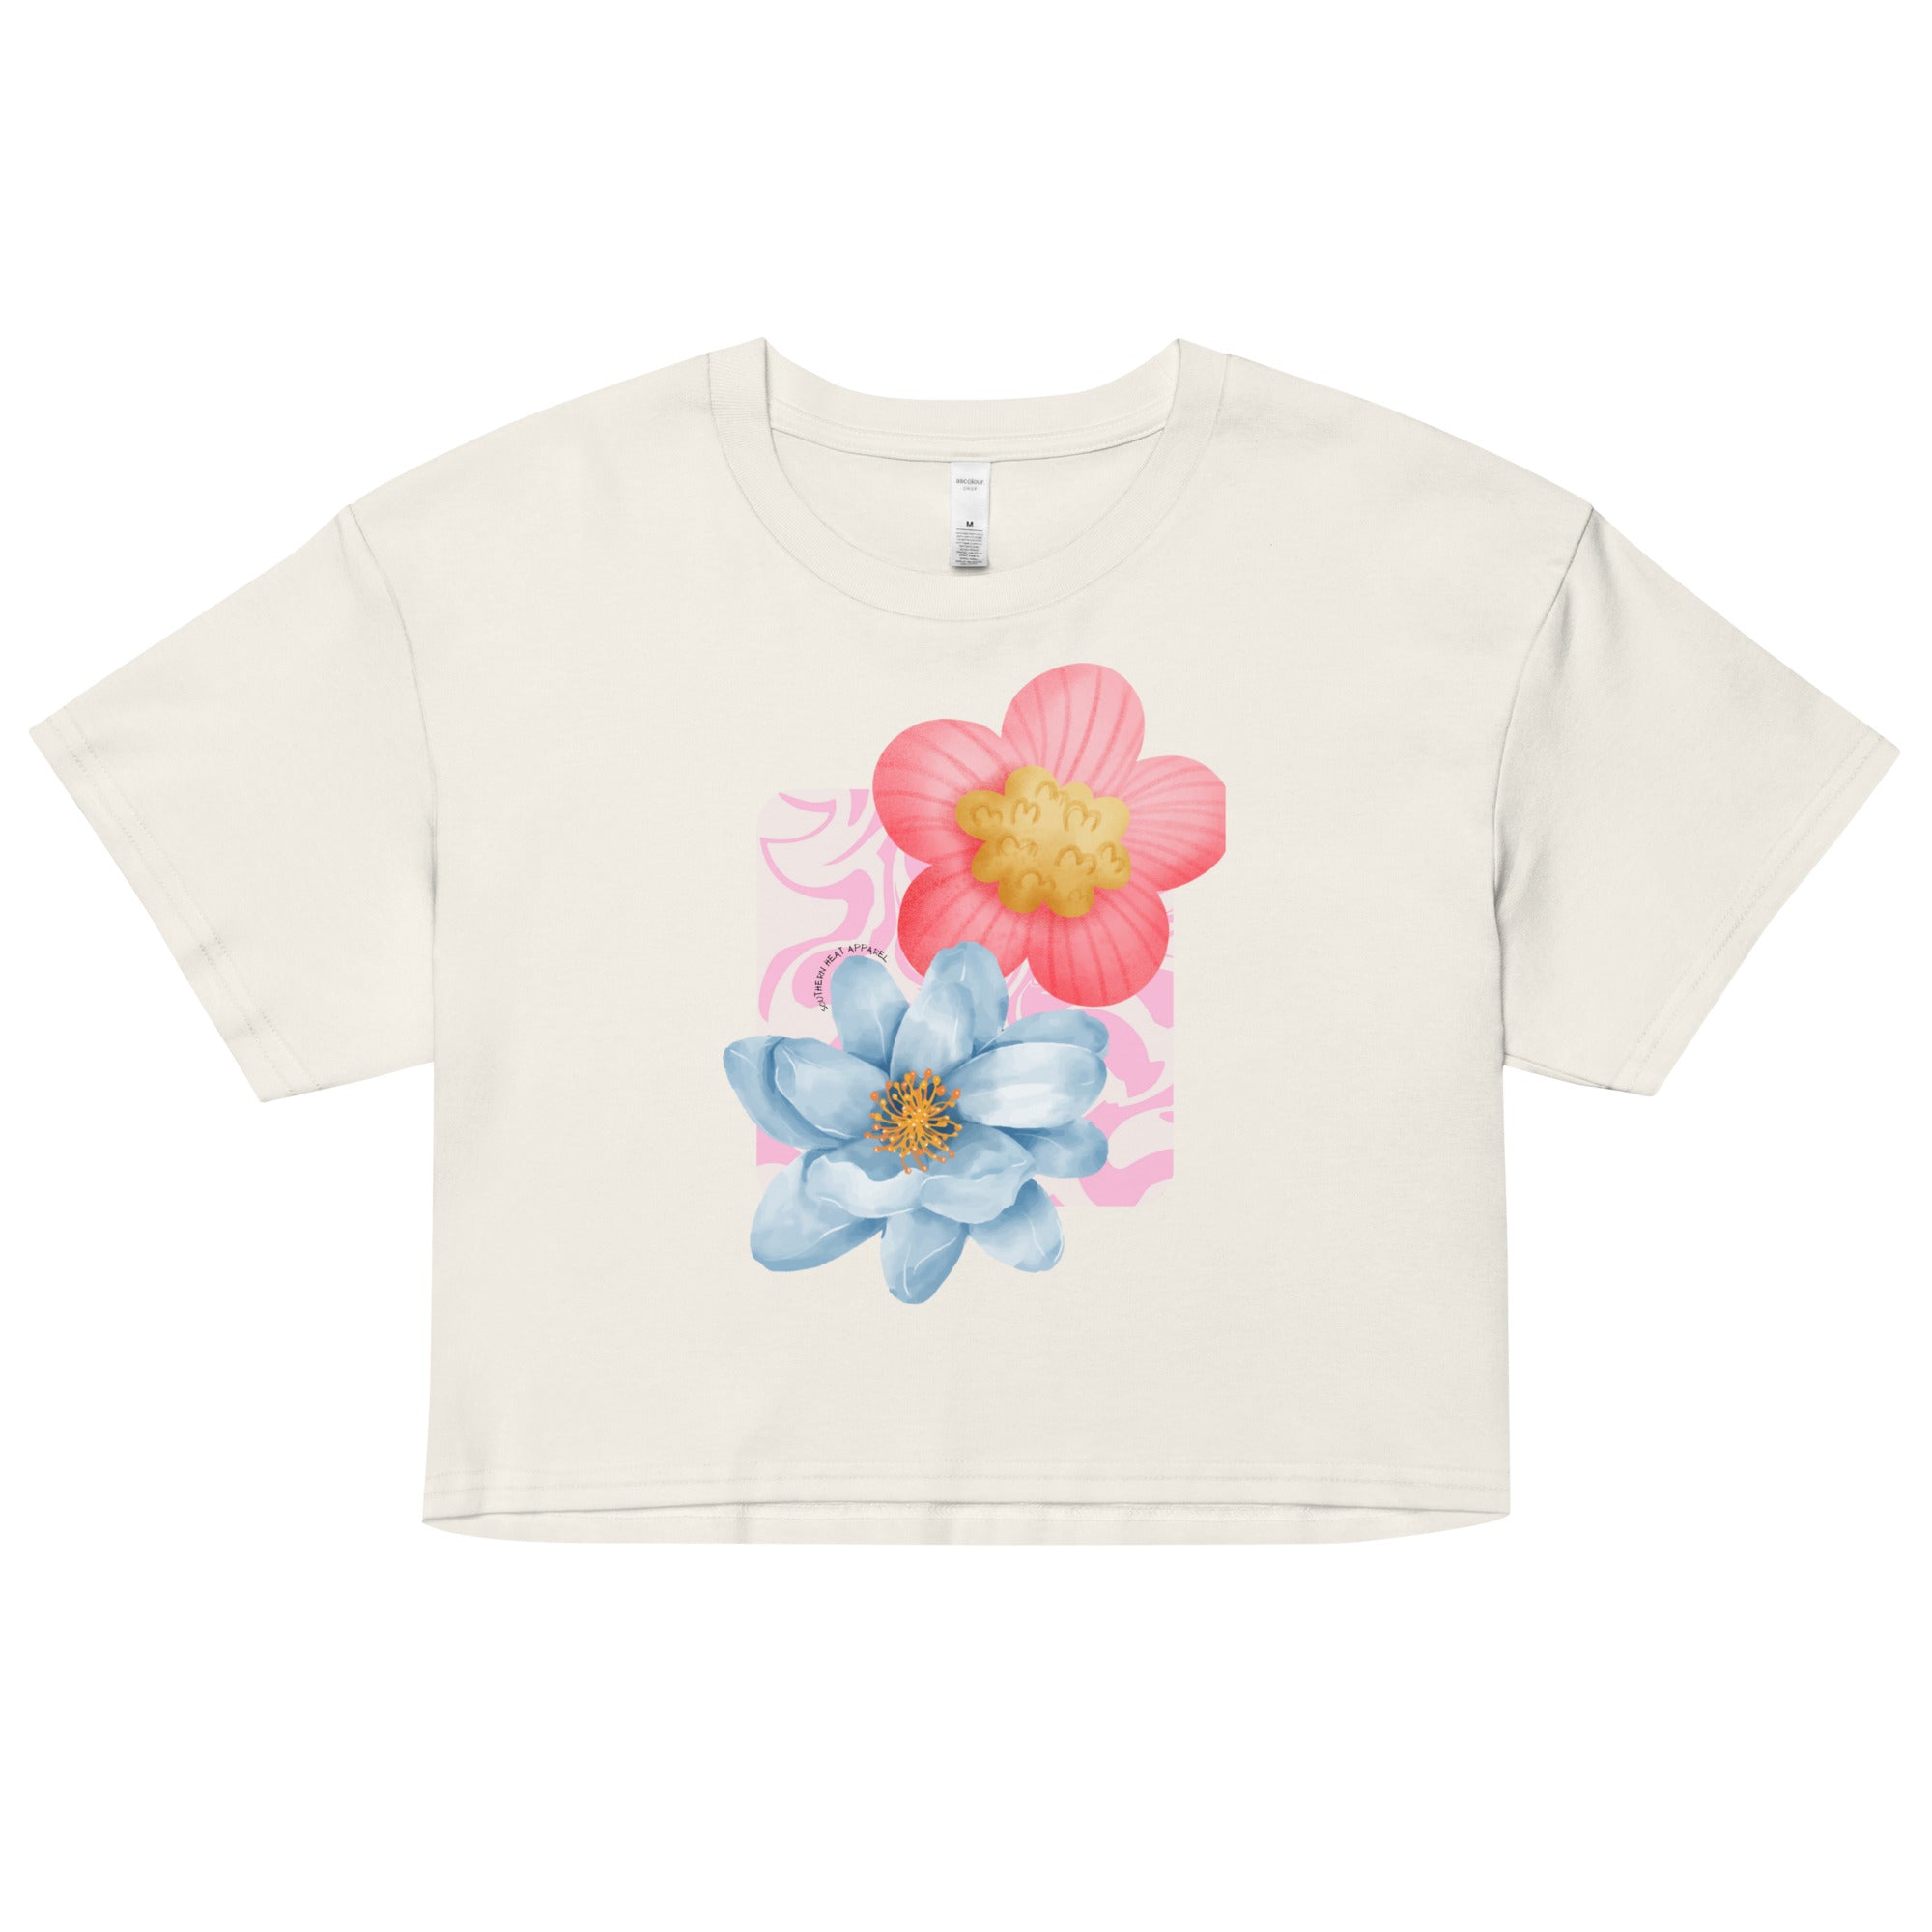 pink&blue.floral-Women’s crop top